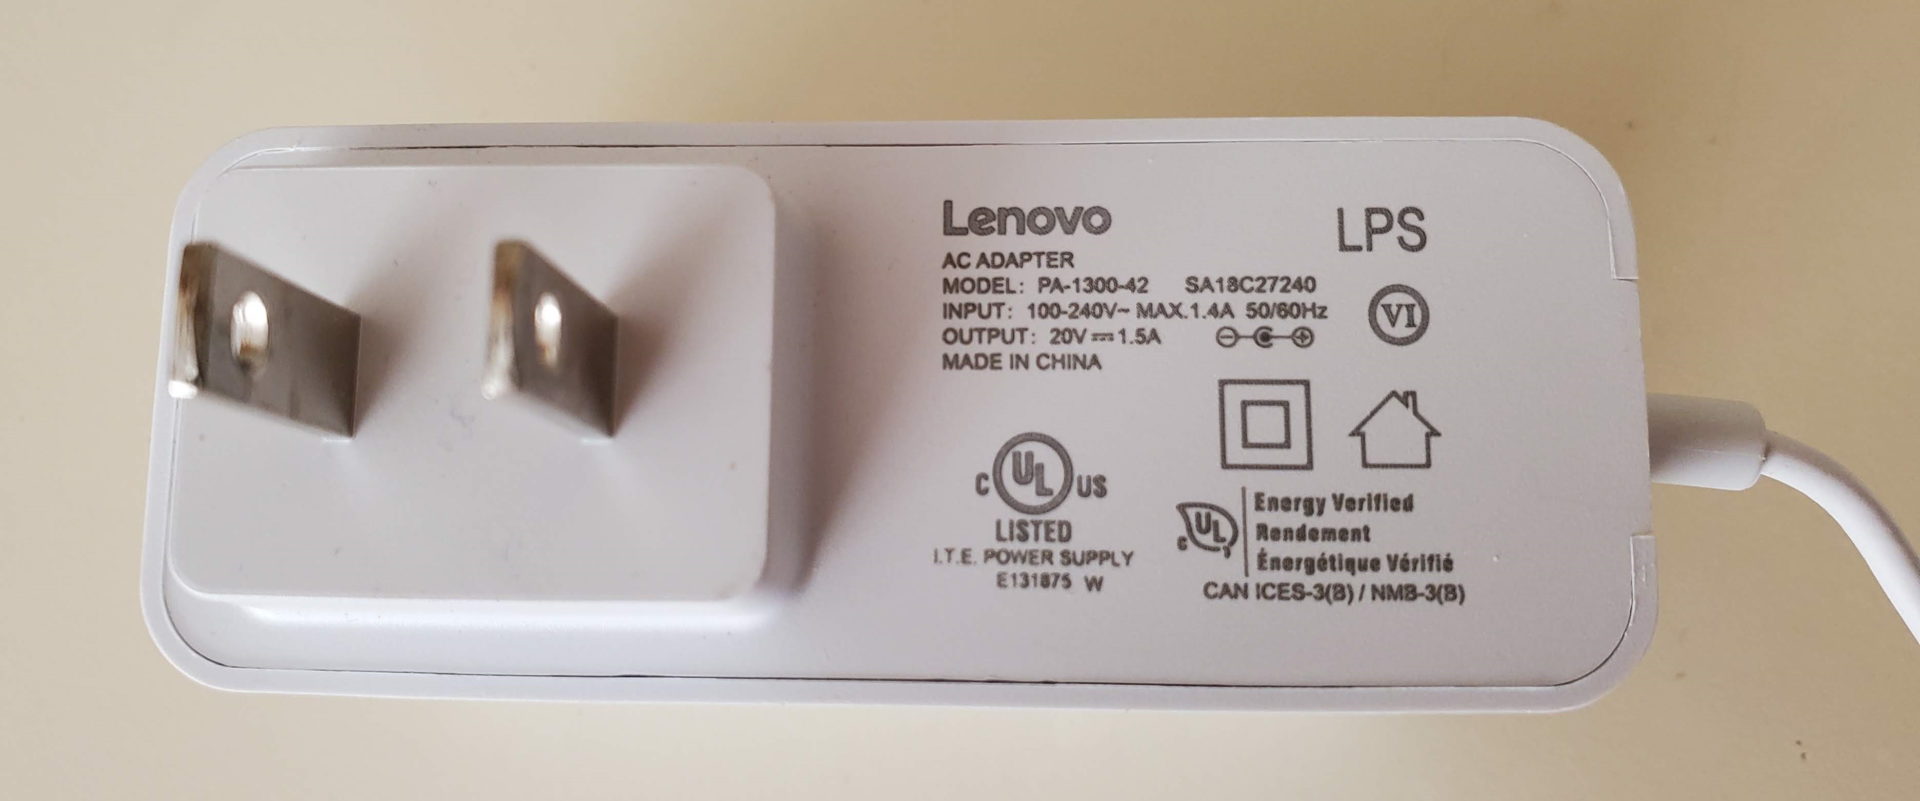 Lenovo Smart Display 10 Power Supply Specs - James Has Answers